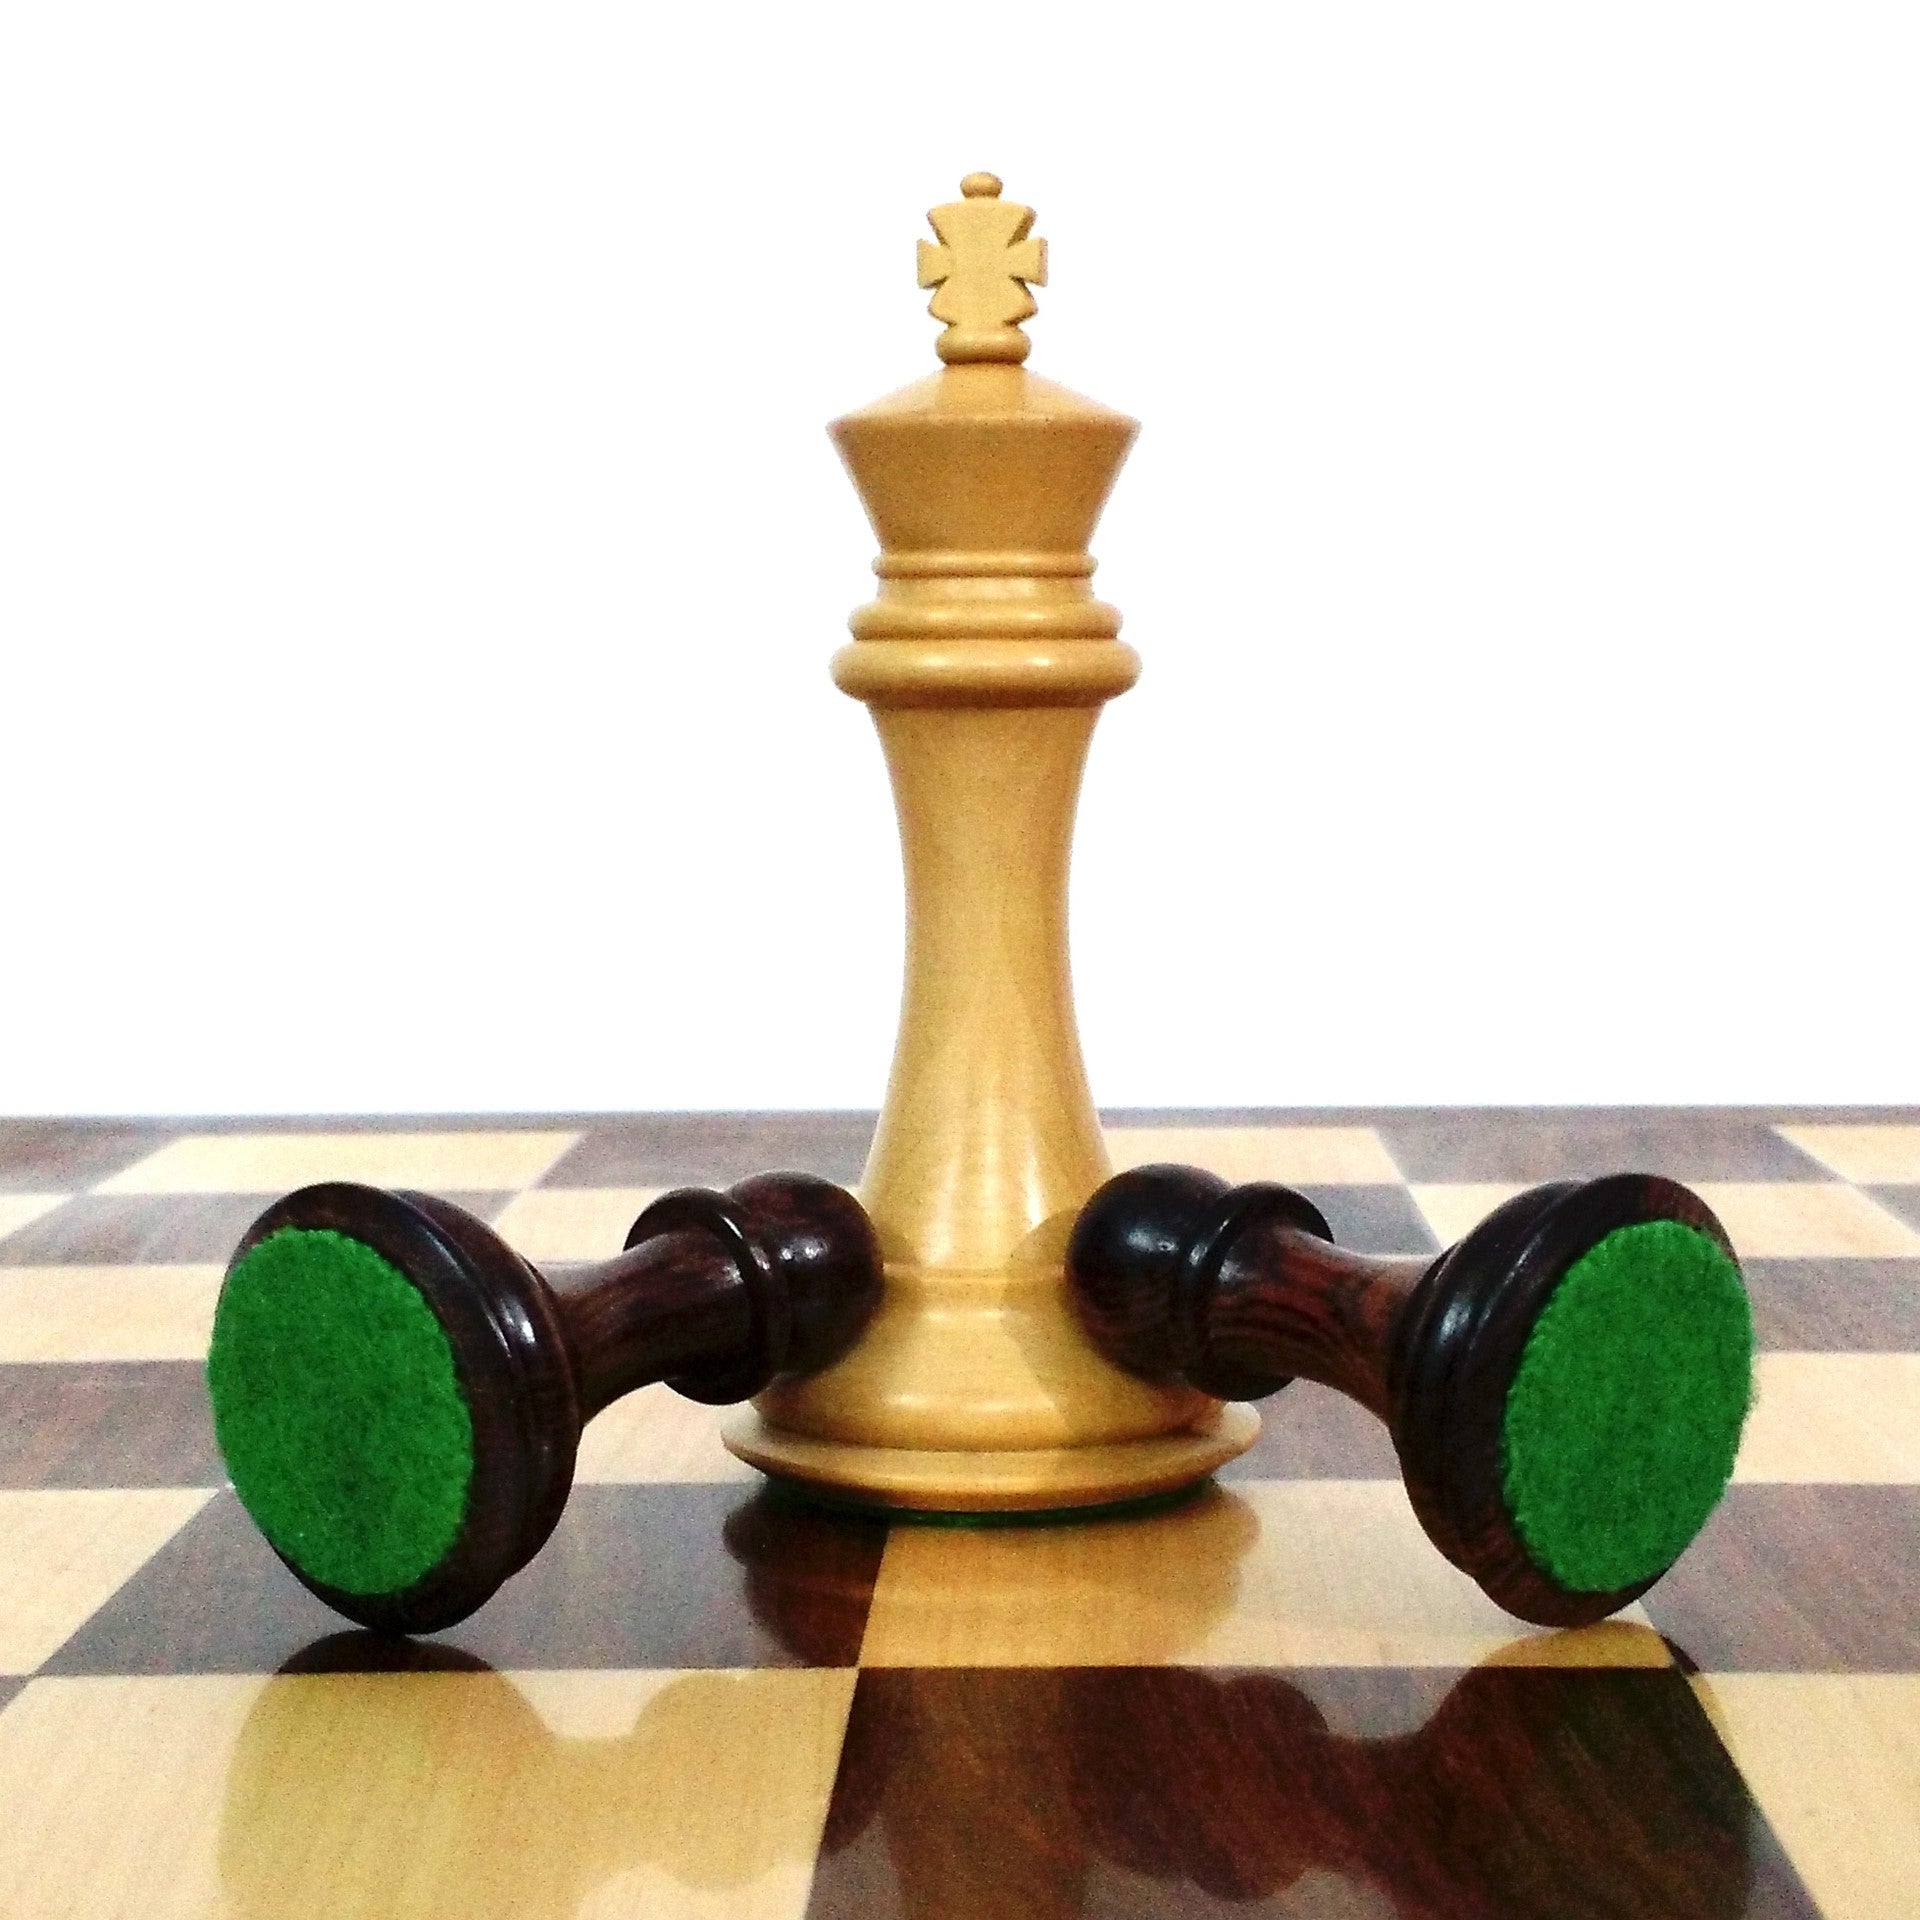 Rare American Staunton Luxury Chess Pieces Set